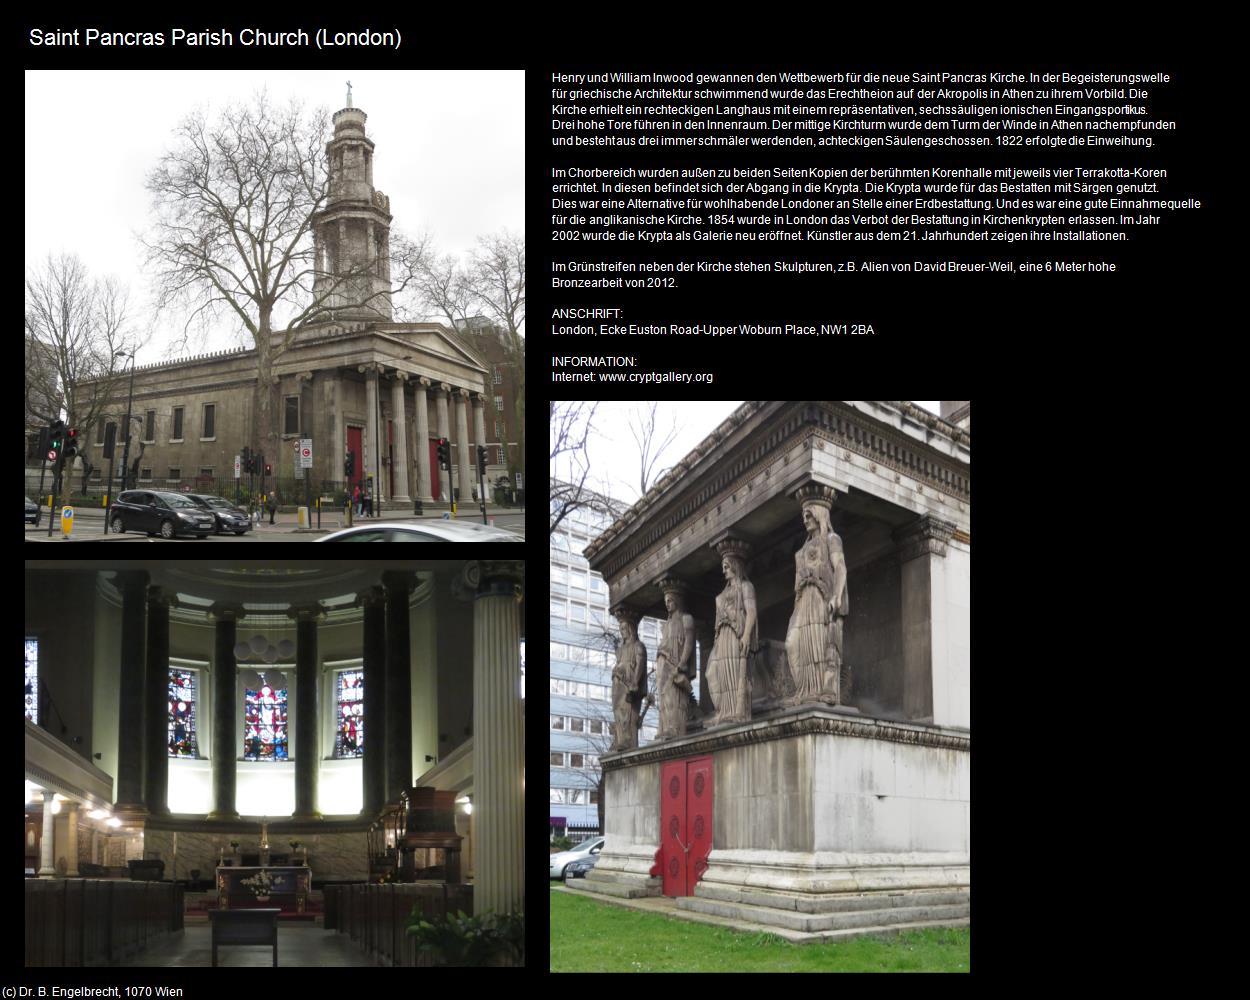 Saint Pancras Parish Church (London, England) in Kulturatlas-ENGLAND und WALES